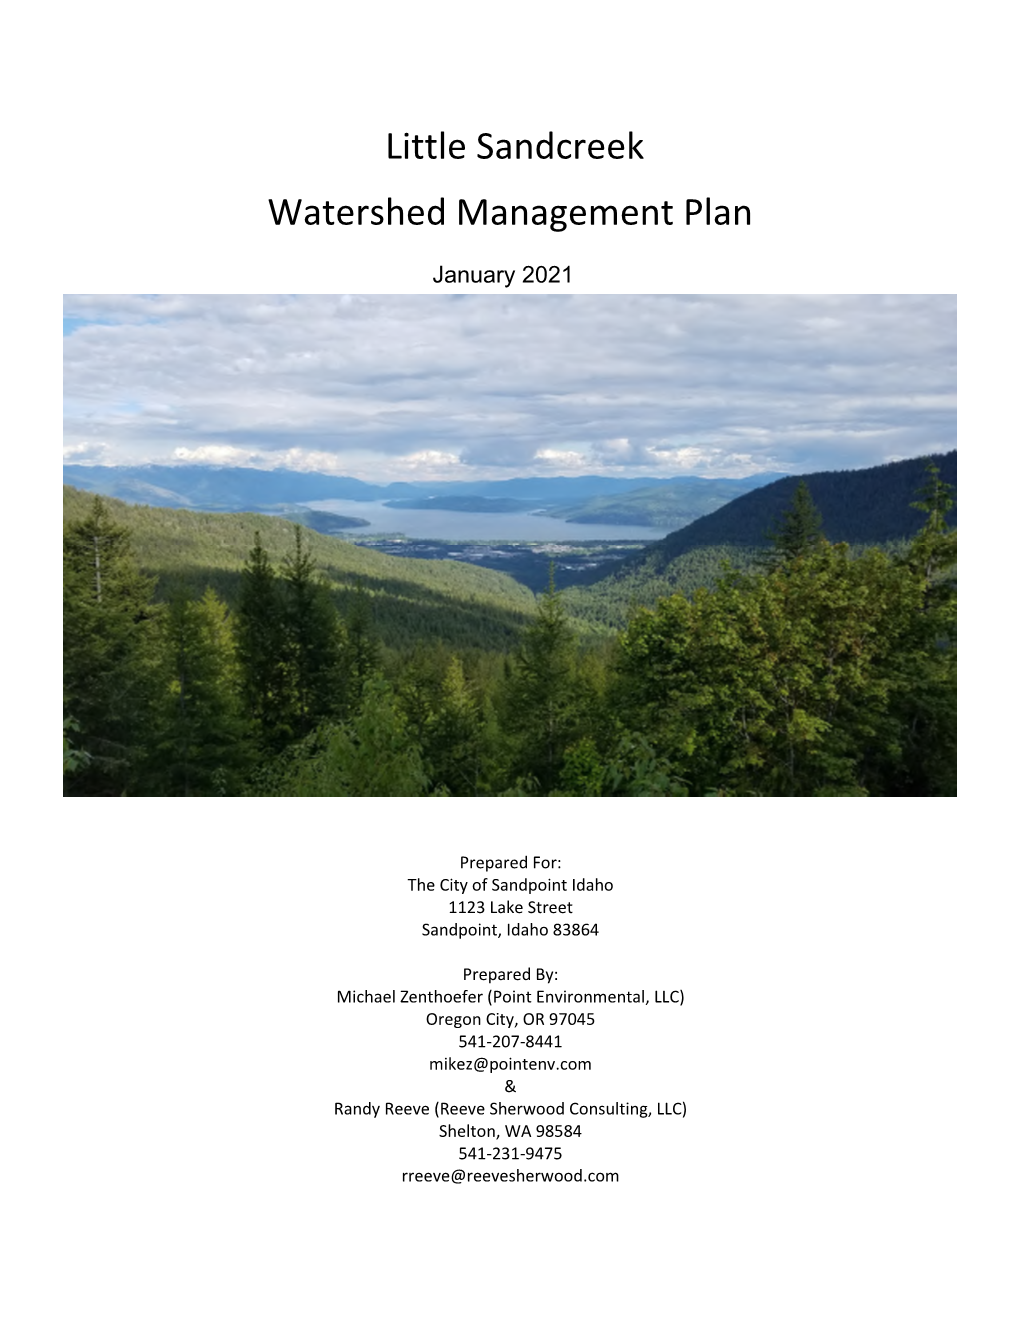 Little Sandcreek Watershed Management Plan